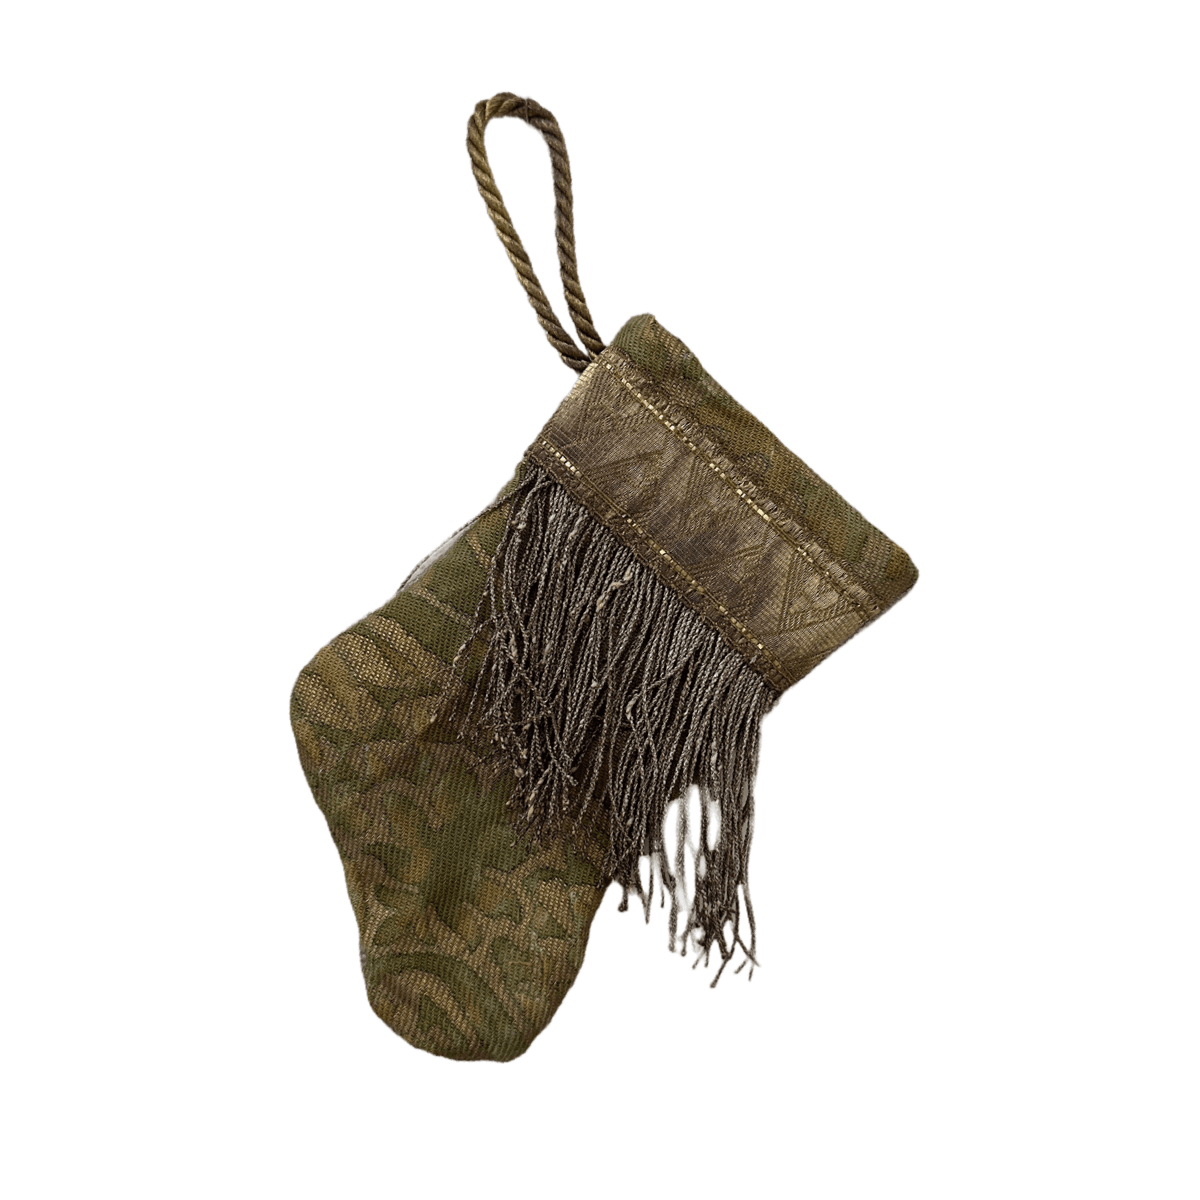 Handmade Mini Stocking Ornament from Antique & Vintage Textiles, Trims | Green Fortuny Ornament B. Viz Design A 